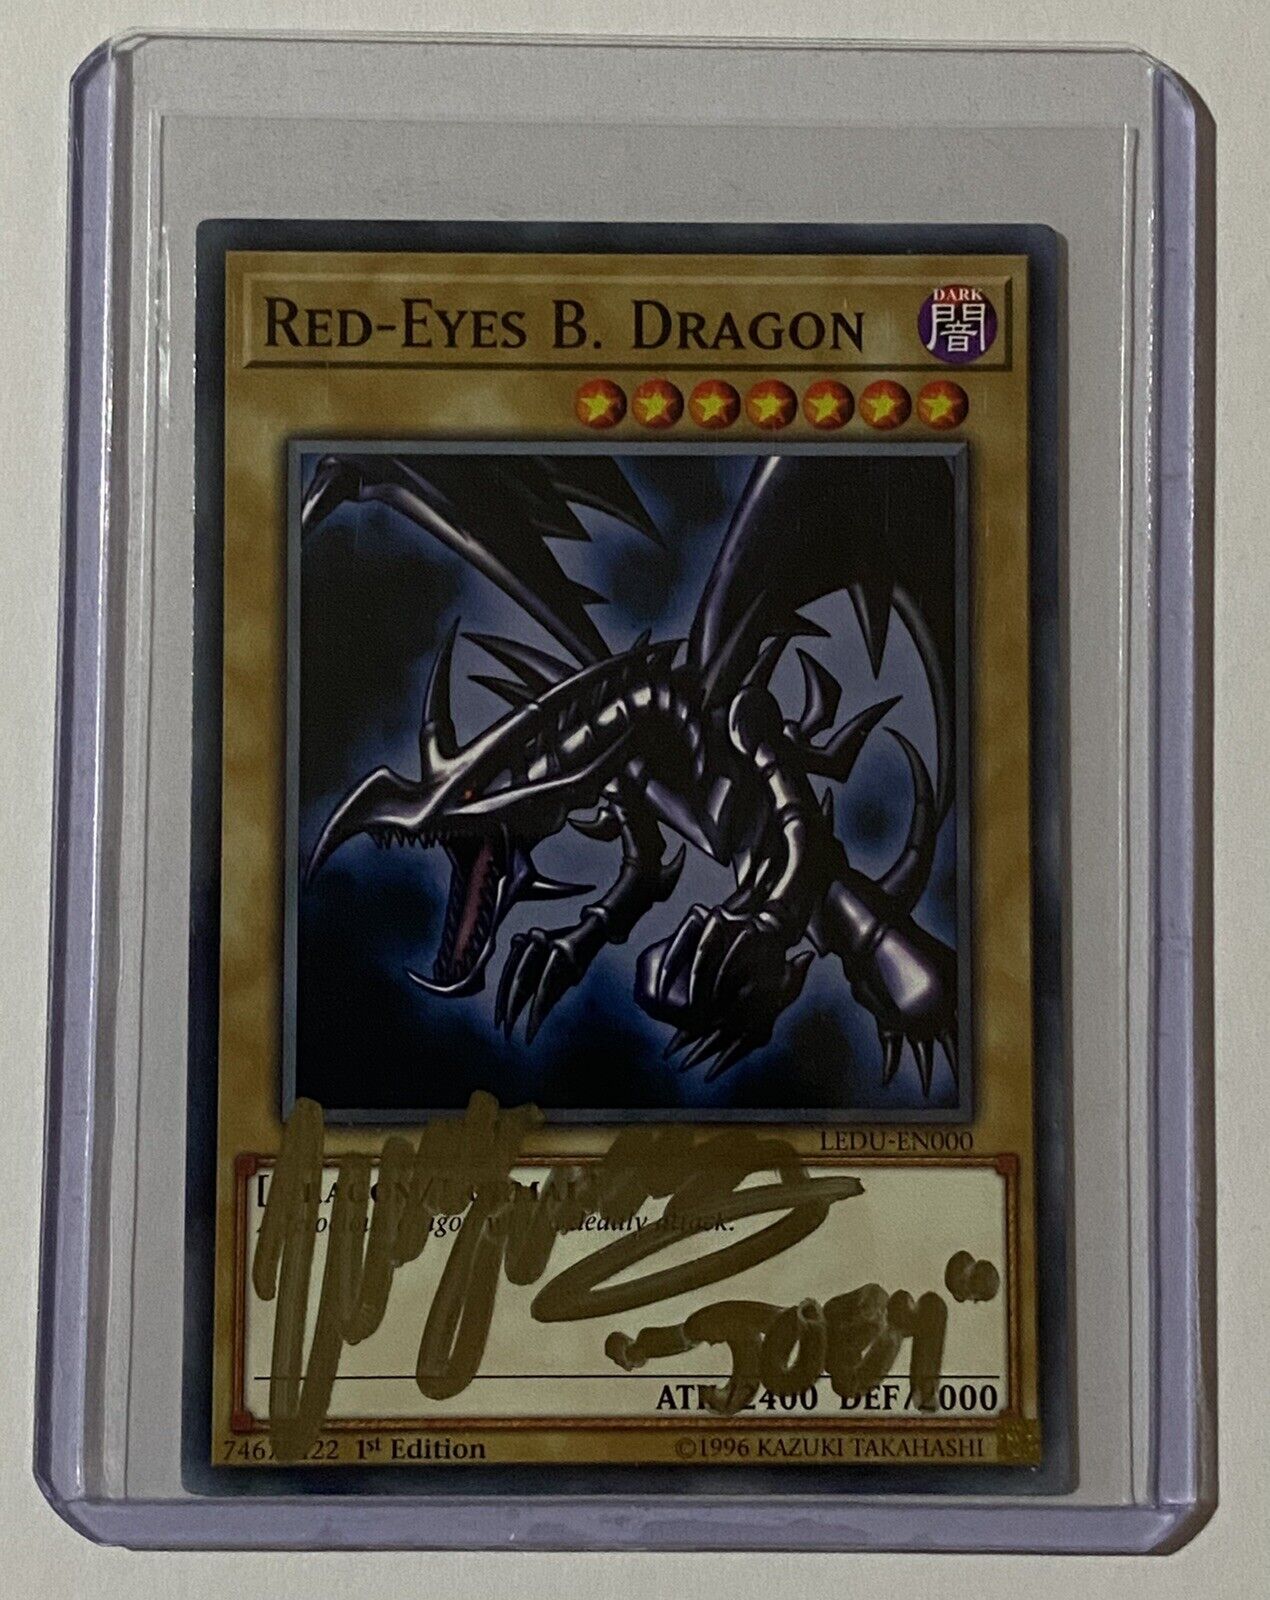 Signed Red Eyes Black Dragon yugioh card by Wayne Grayson - Joey Wheeler #2